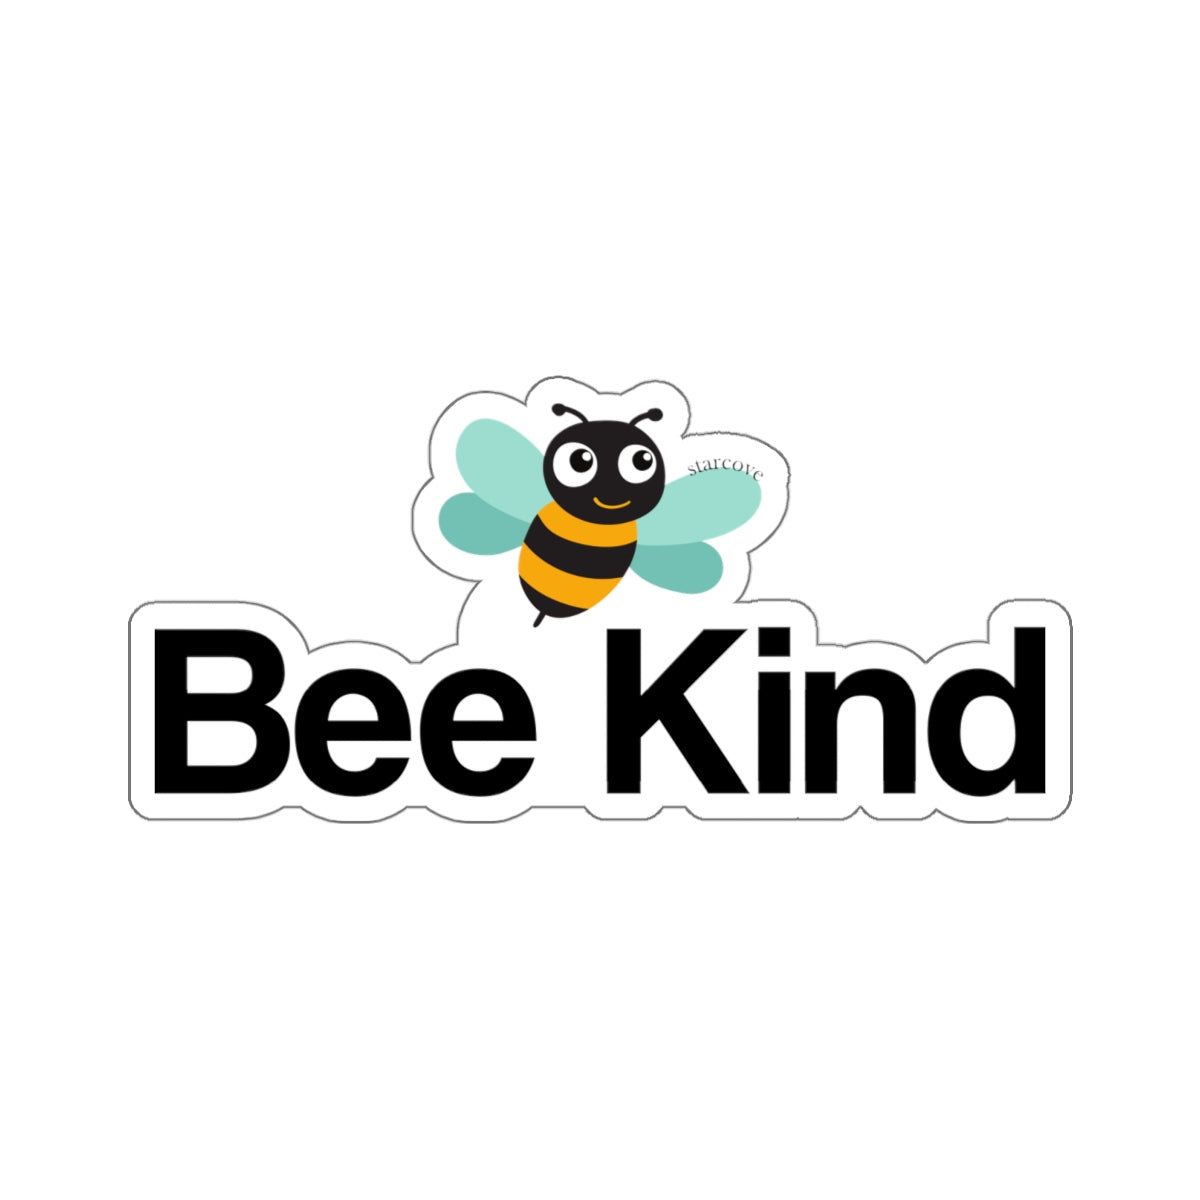 Bee Kind Sticker, Be Kind Vinyl Decal, Bumper Car Laptop Sign, Choose Kind, Cute Positive Waterproof Waterbottle  Kiss-Cut Stickers Starcove Fashion